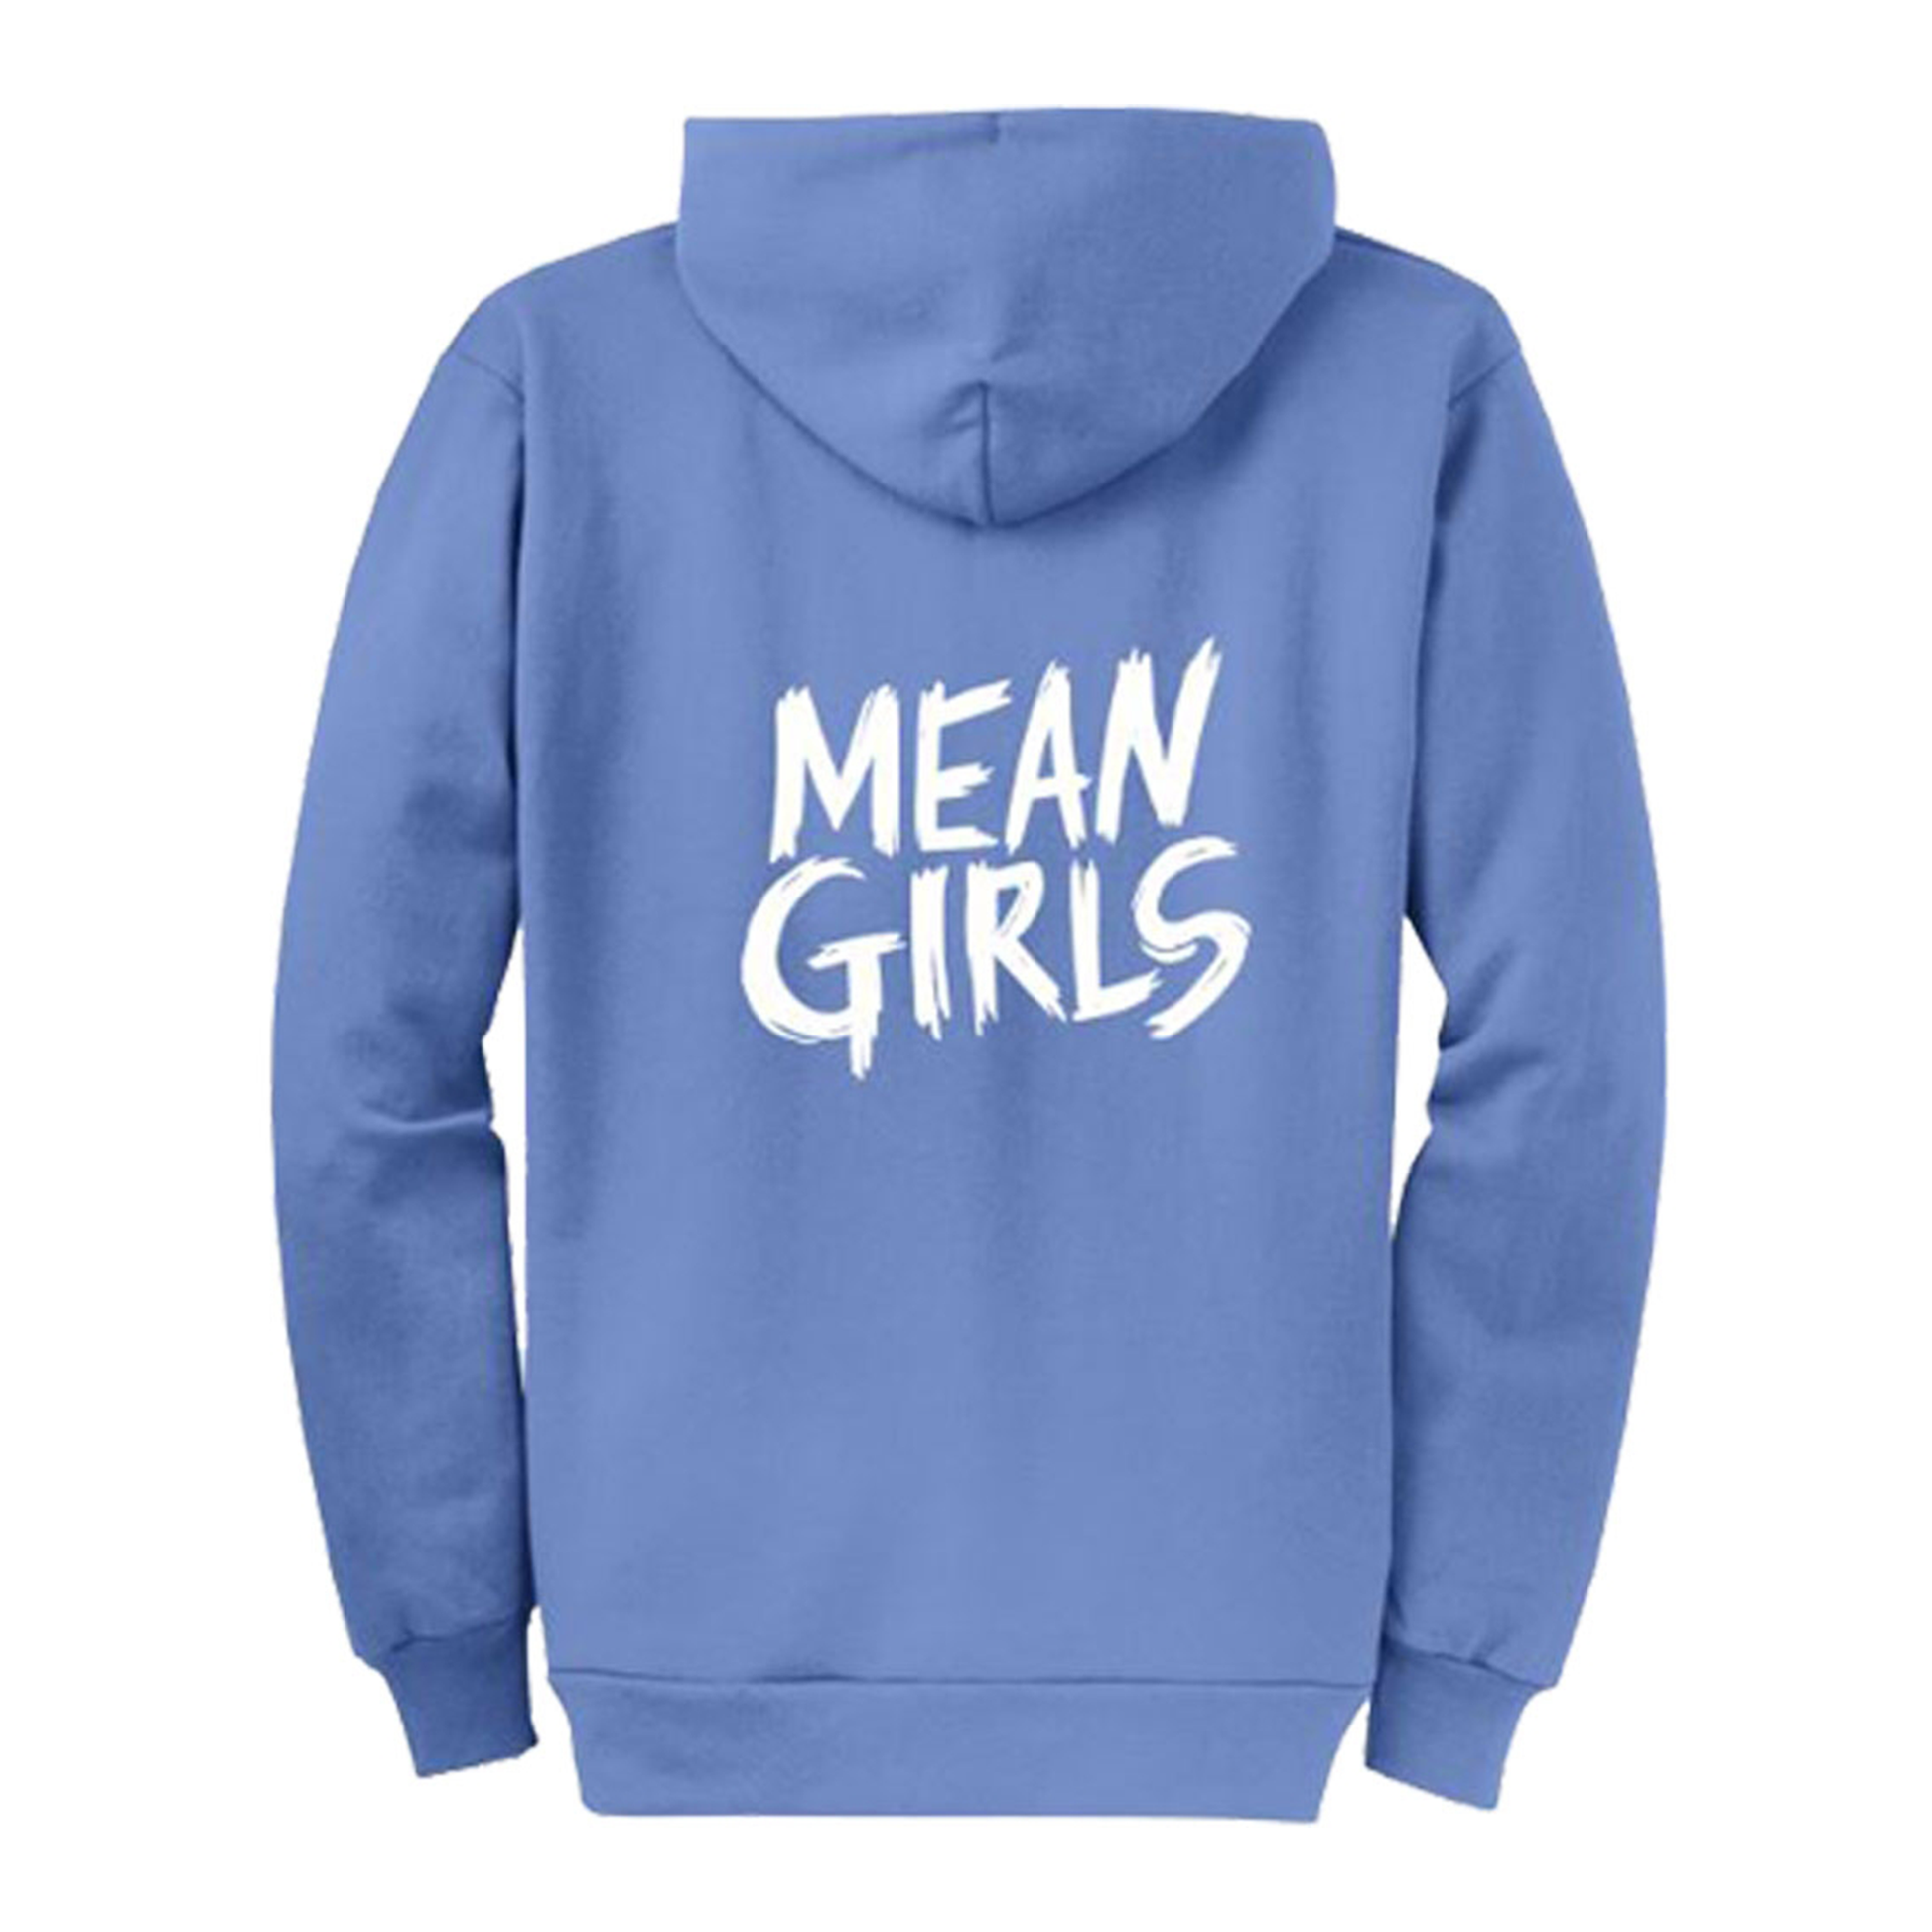 Mean Girls Hooded Sweatshirts